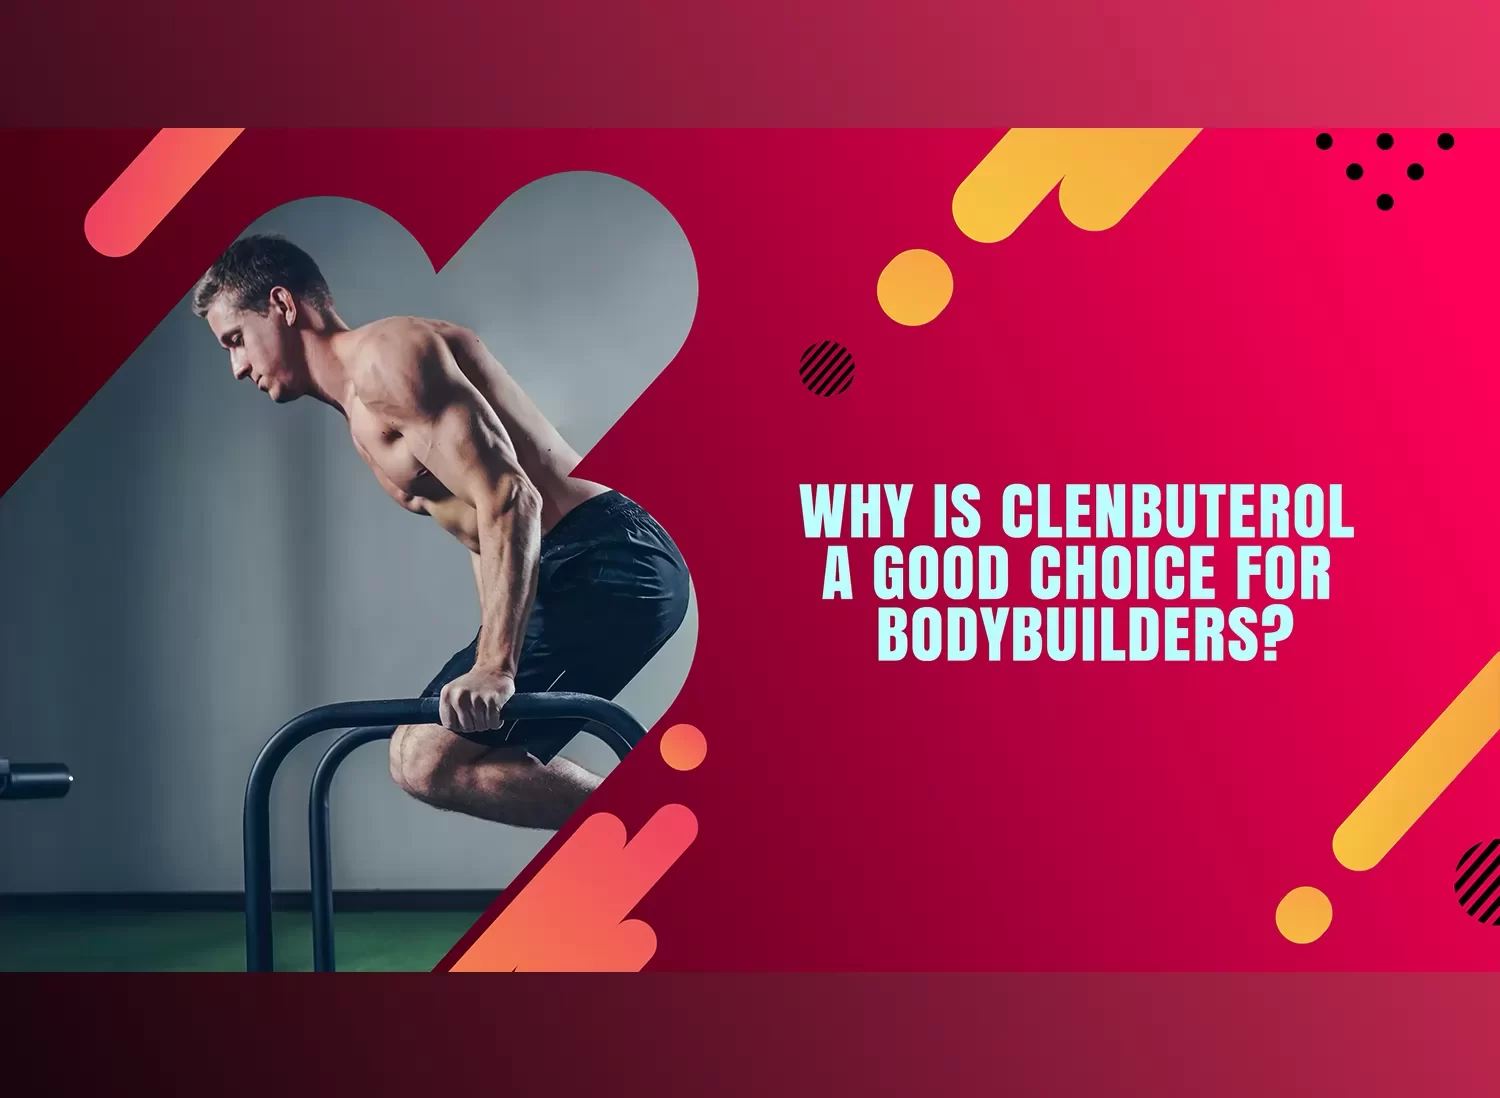 Why choose Clenbuterol